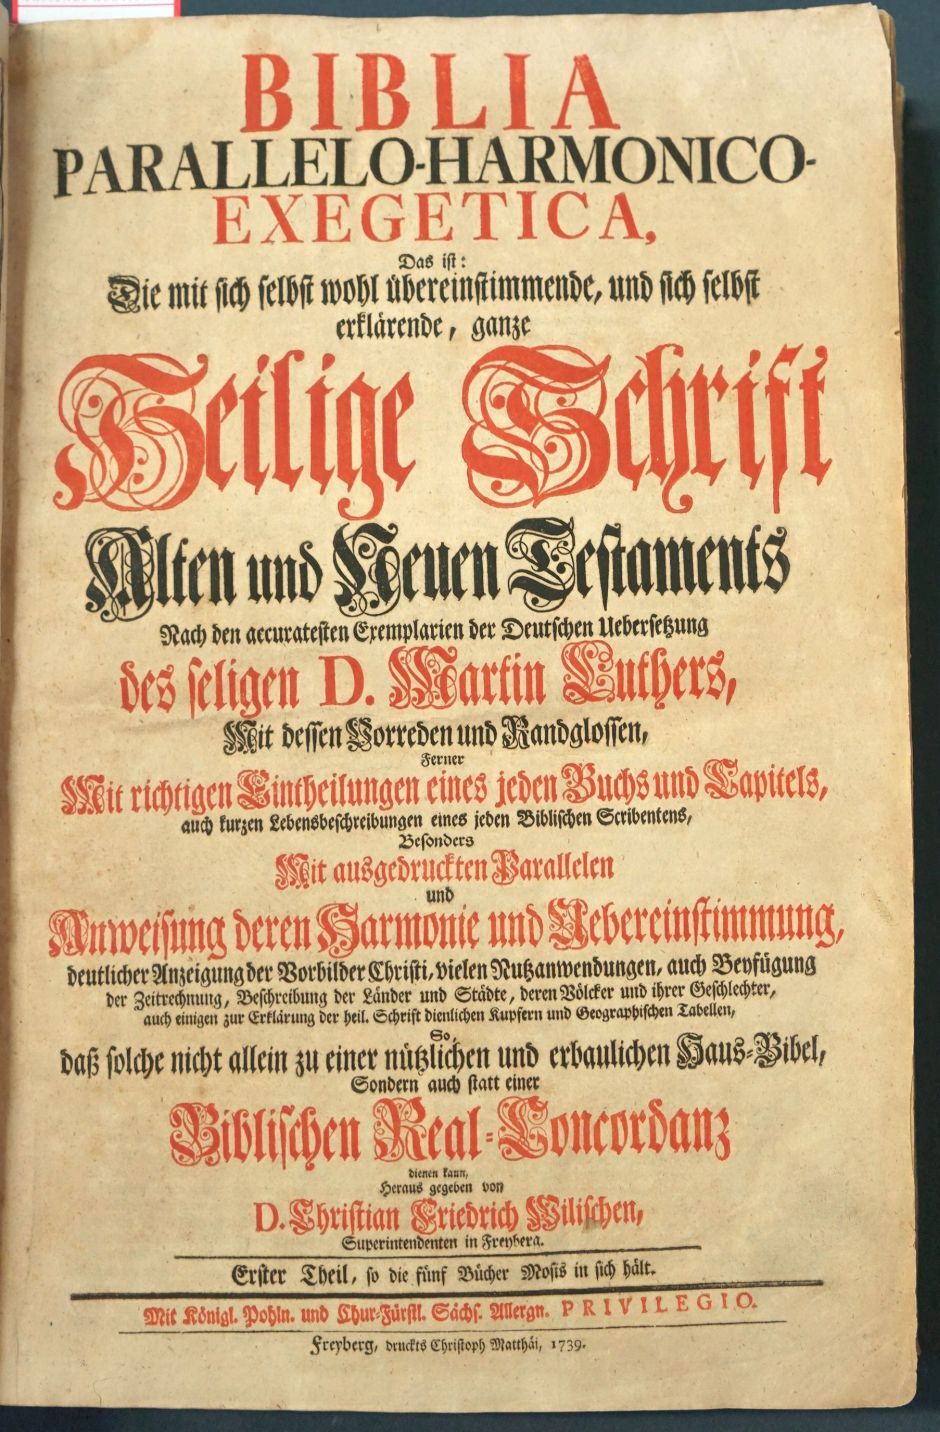 Lot 1232, Auction  115, Biblia germanica, Biblia parallelo-harmonico-exegetica